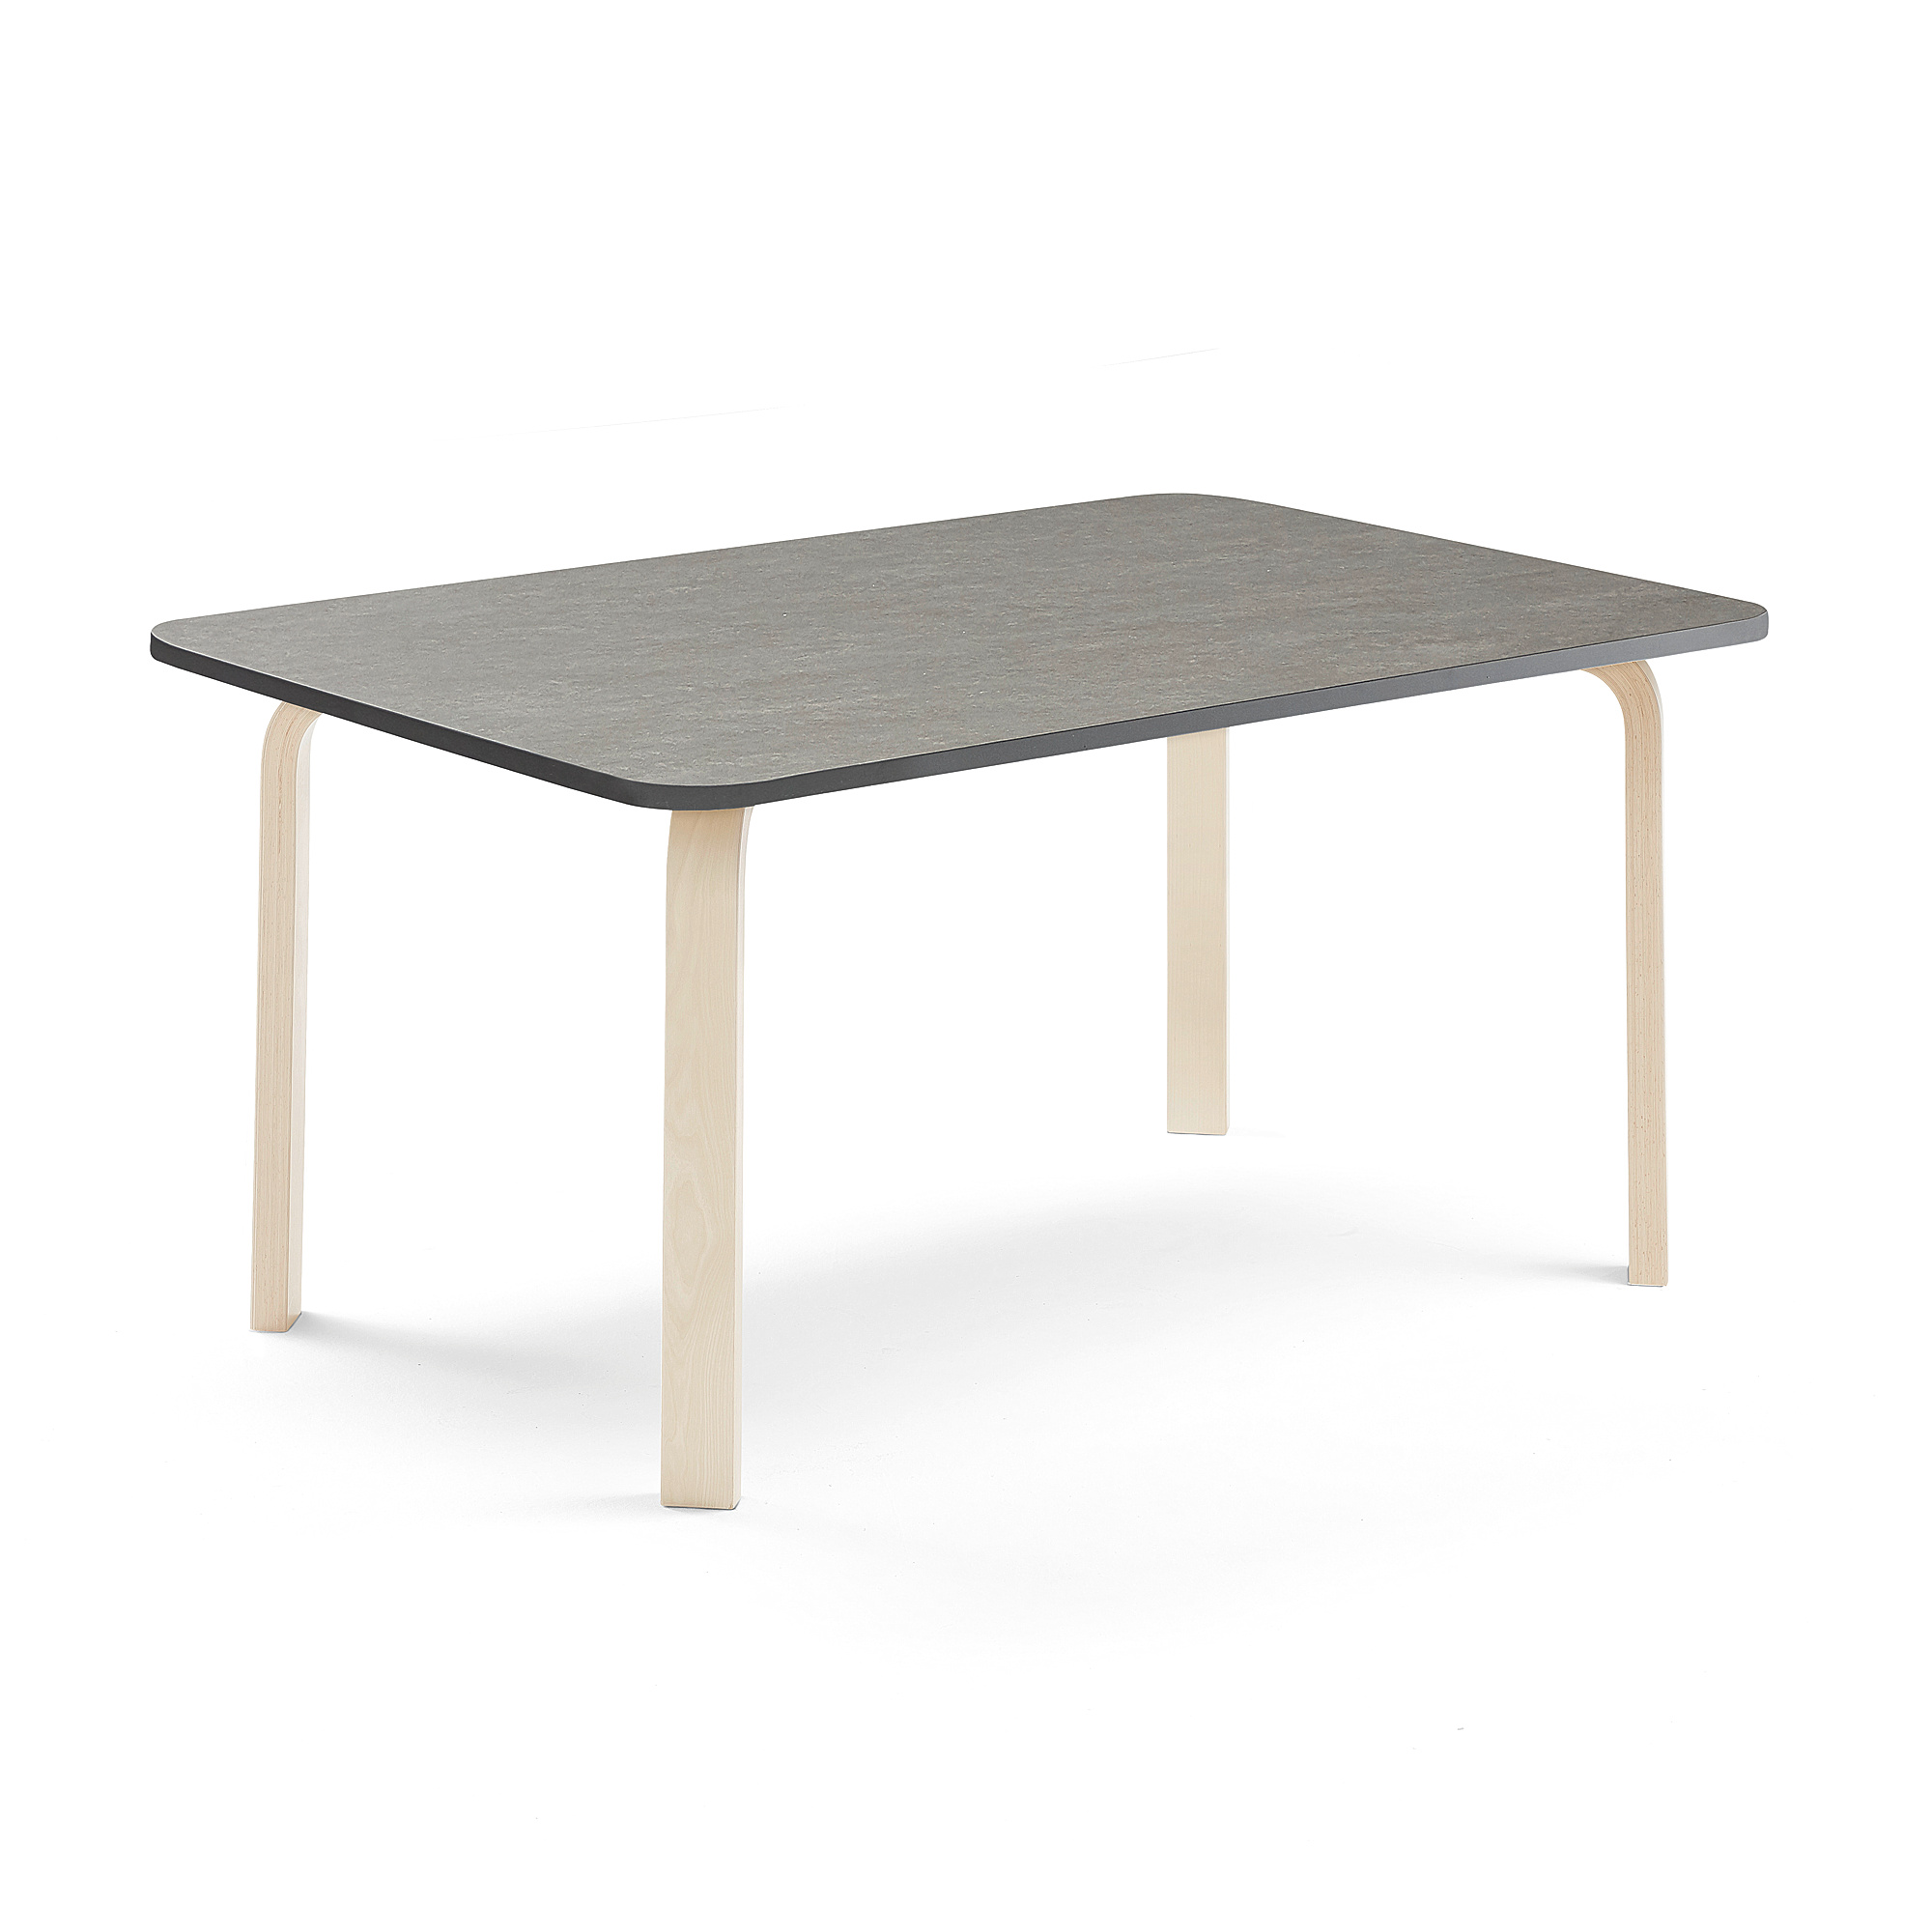 Stůl ELTON, 1200x700x530 mm, bříza, akustické linoleum, šedá